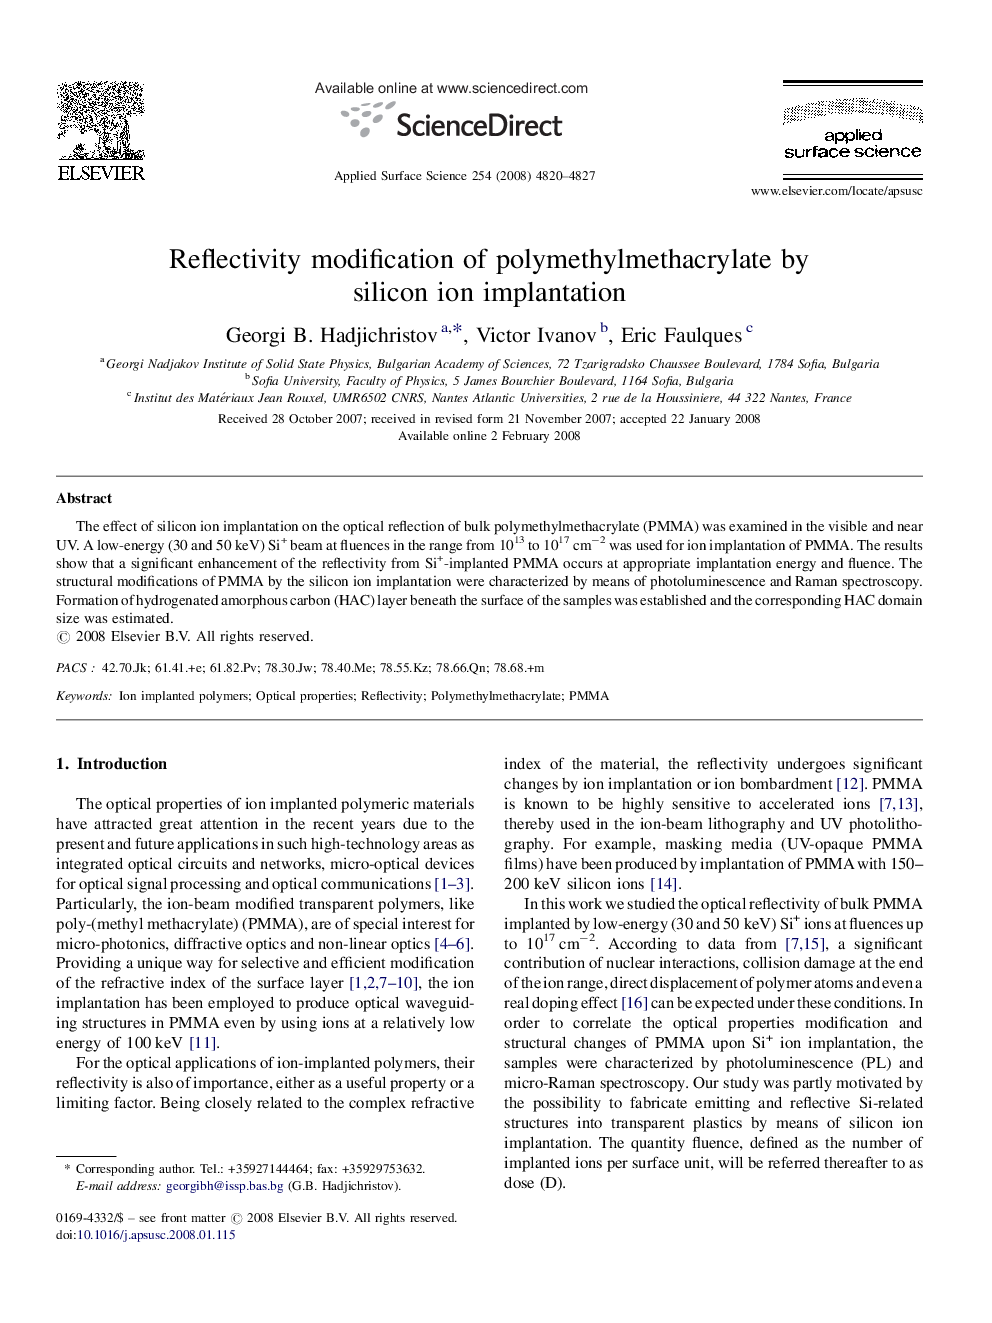 Reflectivity modification of polymethylmethacrylate by silicon ion implantation